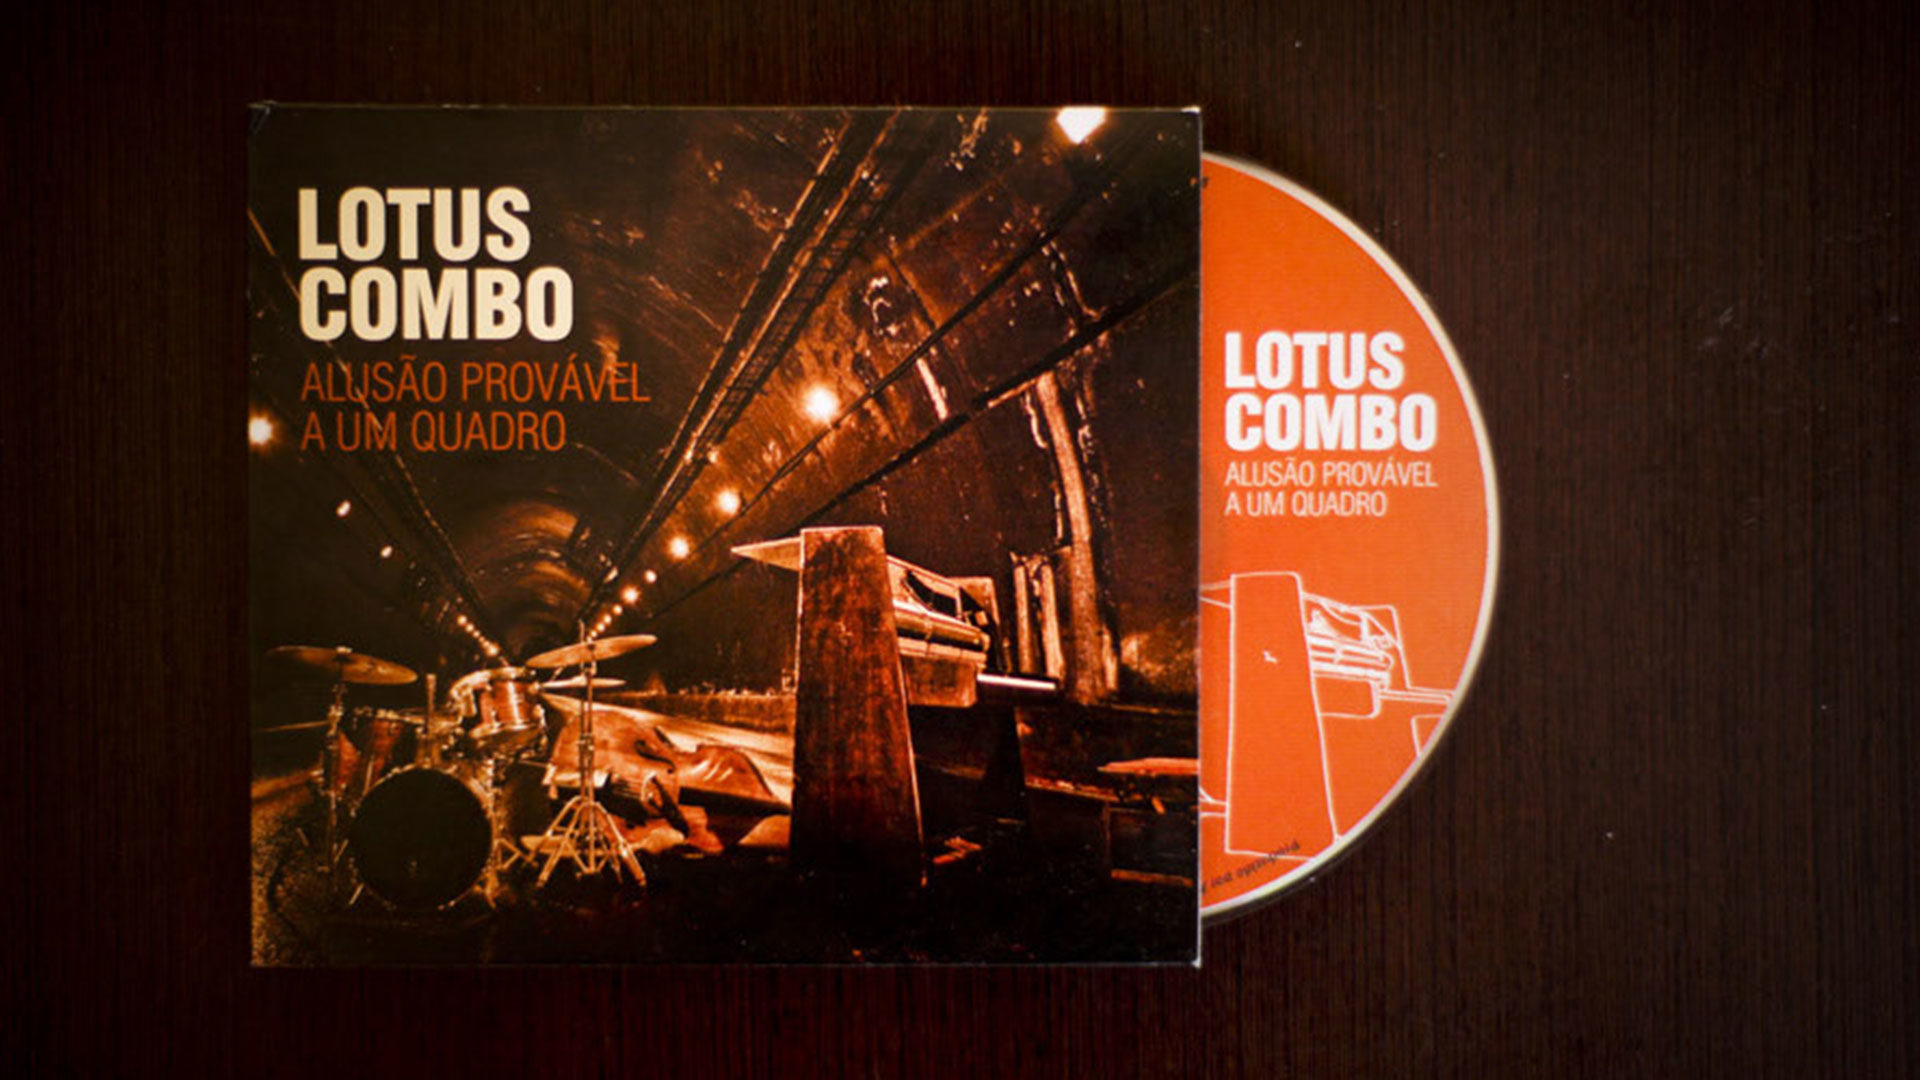 Lotus Combo Album